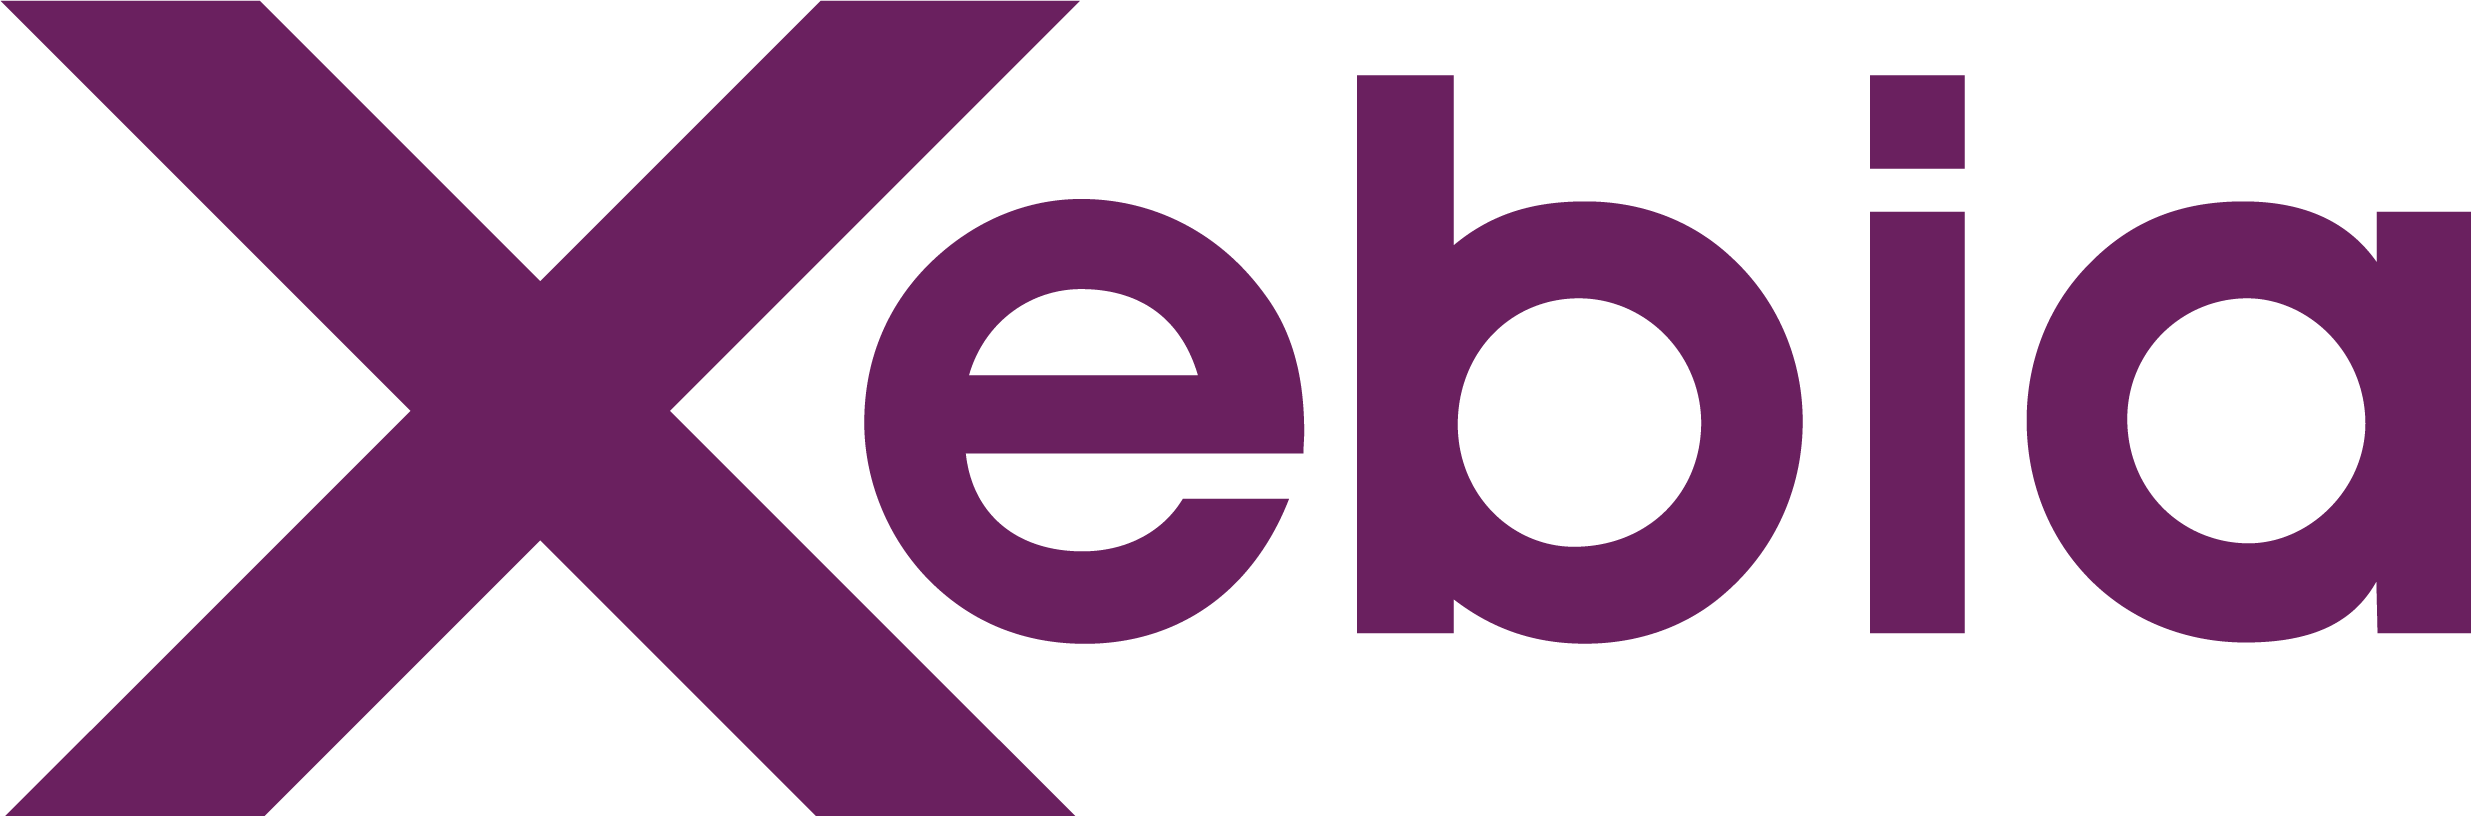 xebia_logo-large-transparent